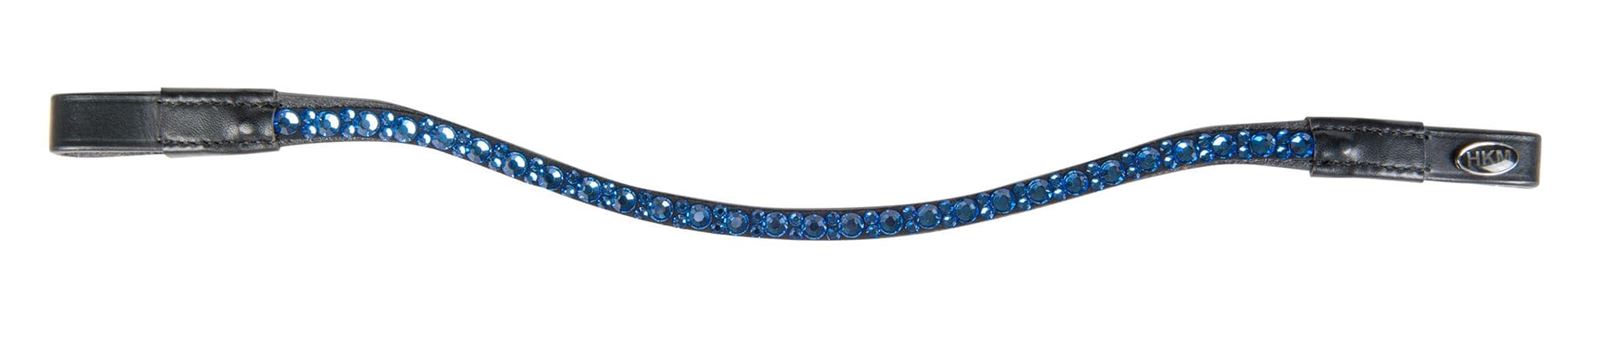 Frontalera HKM modelo Brillant cuero negro, cristales color azul royal TALLA COB - Imagen 4